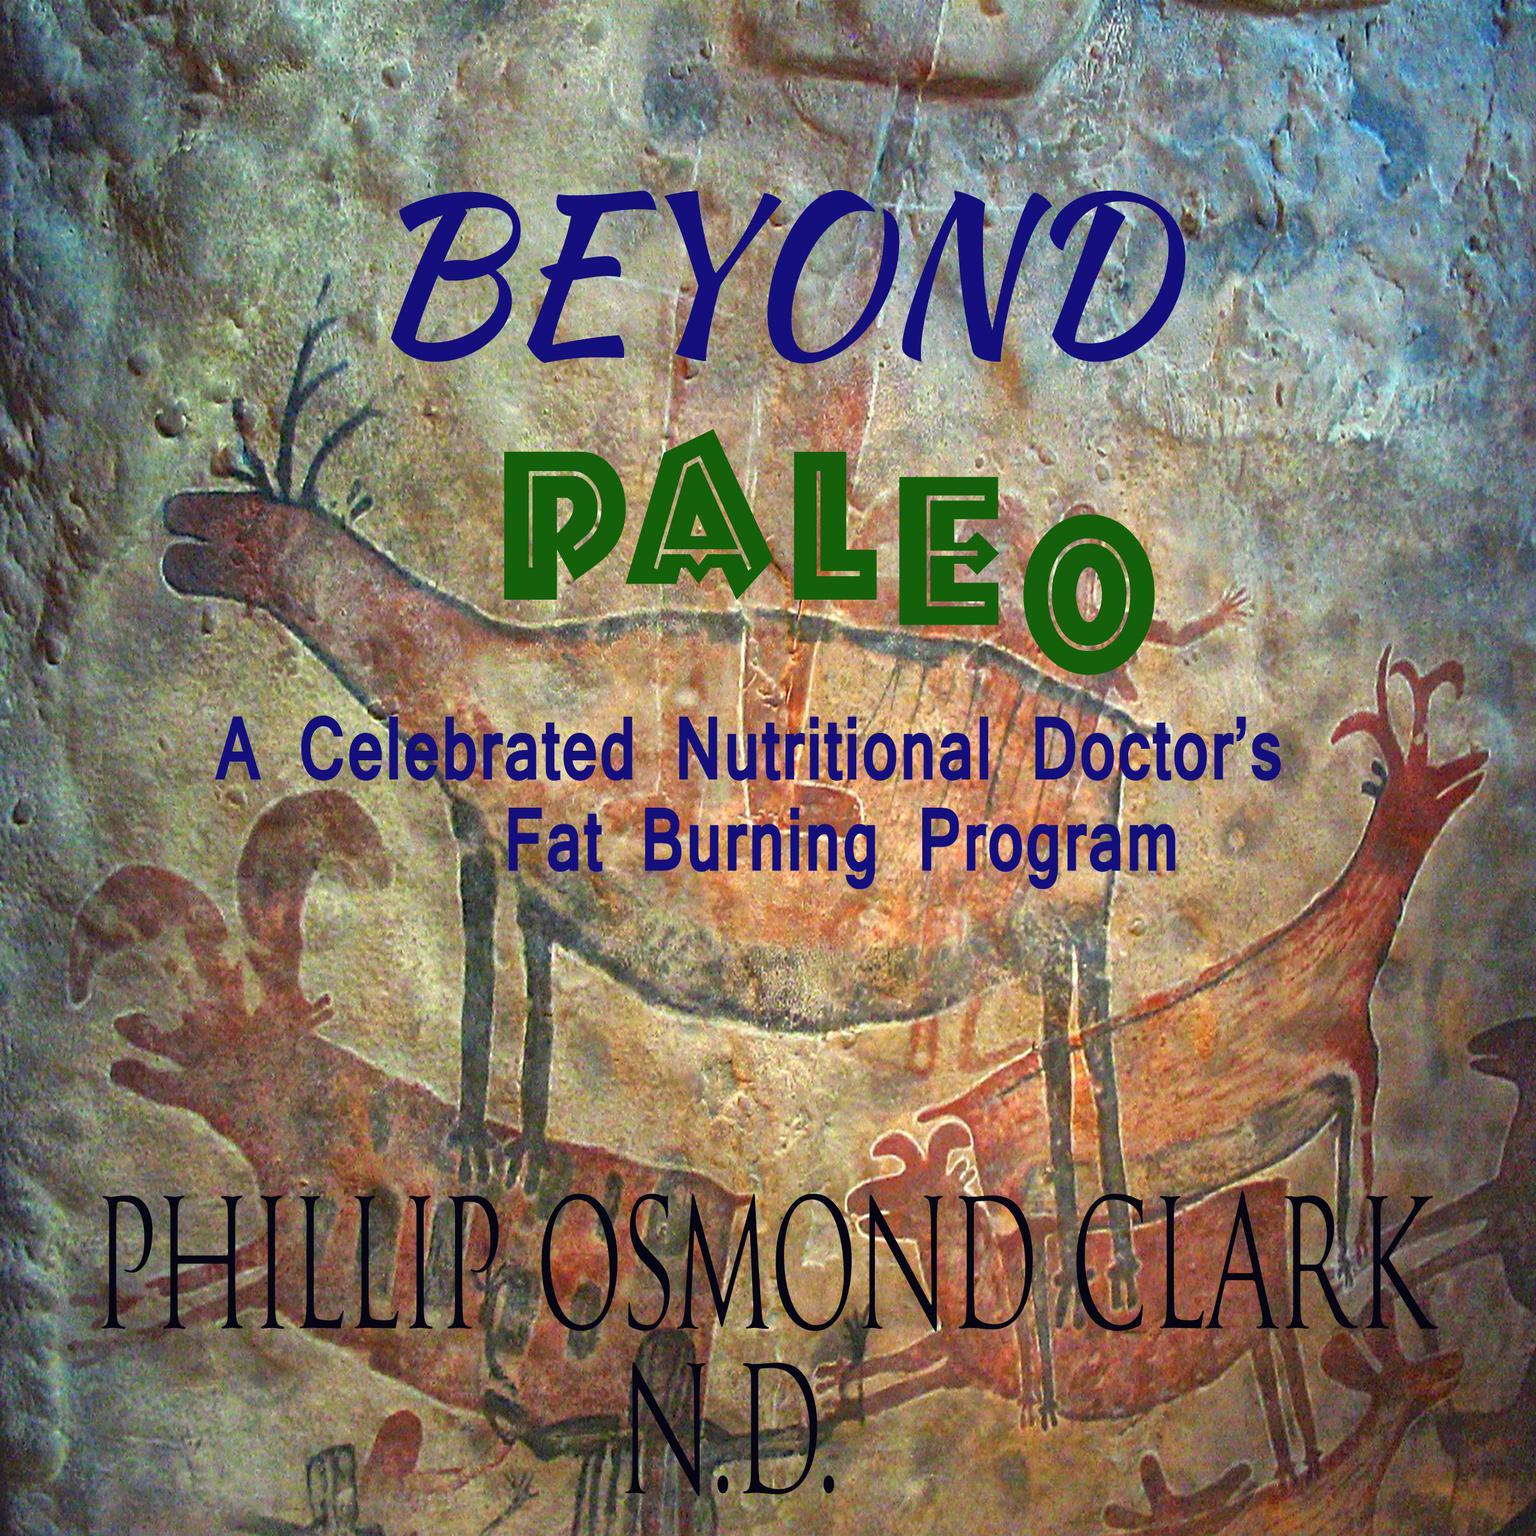 Beyond Paleo - A Celebrated Nutritional Doctors Fat Burning Program Audiobook, by Phillip Osmond Clark